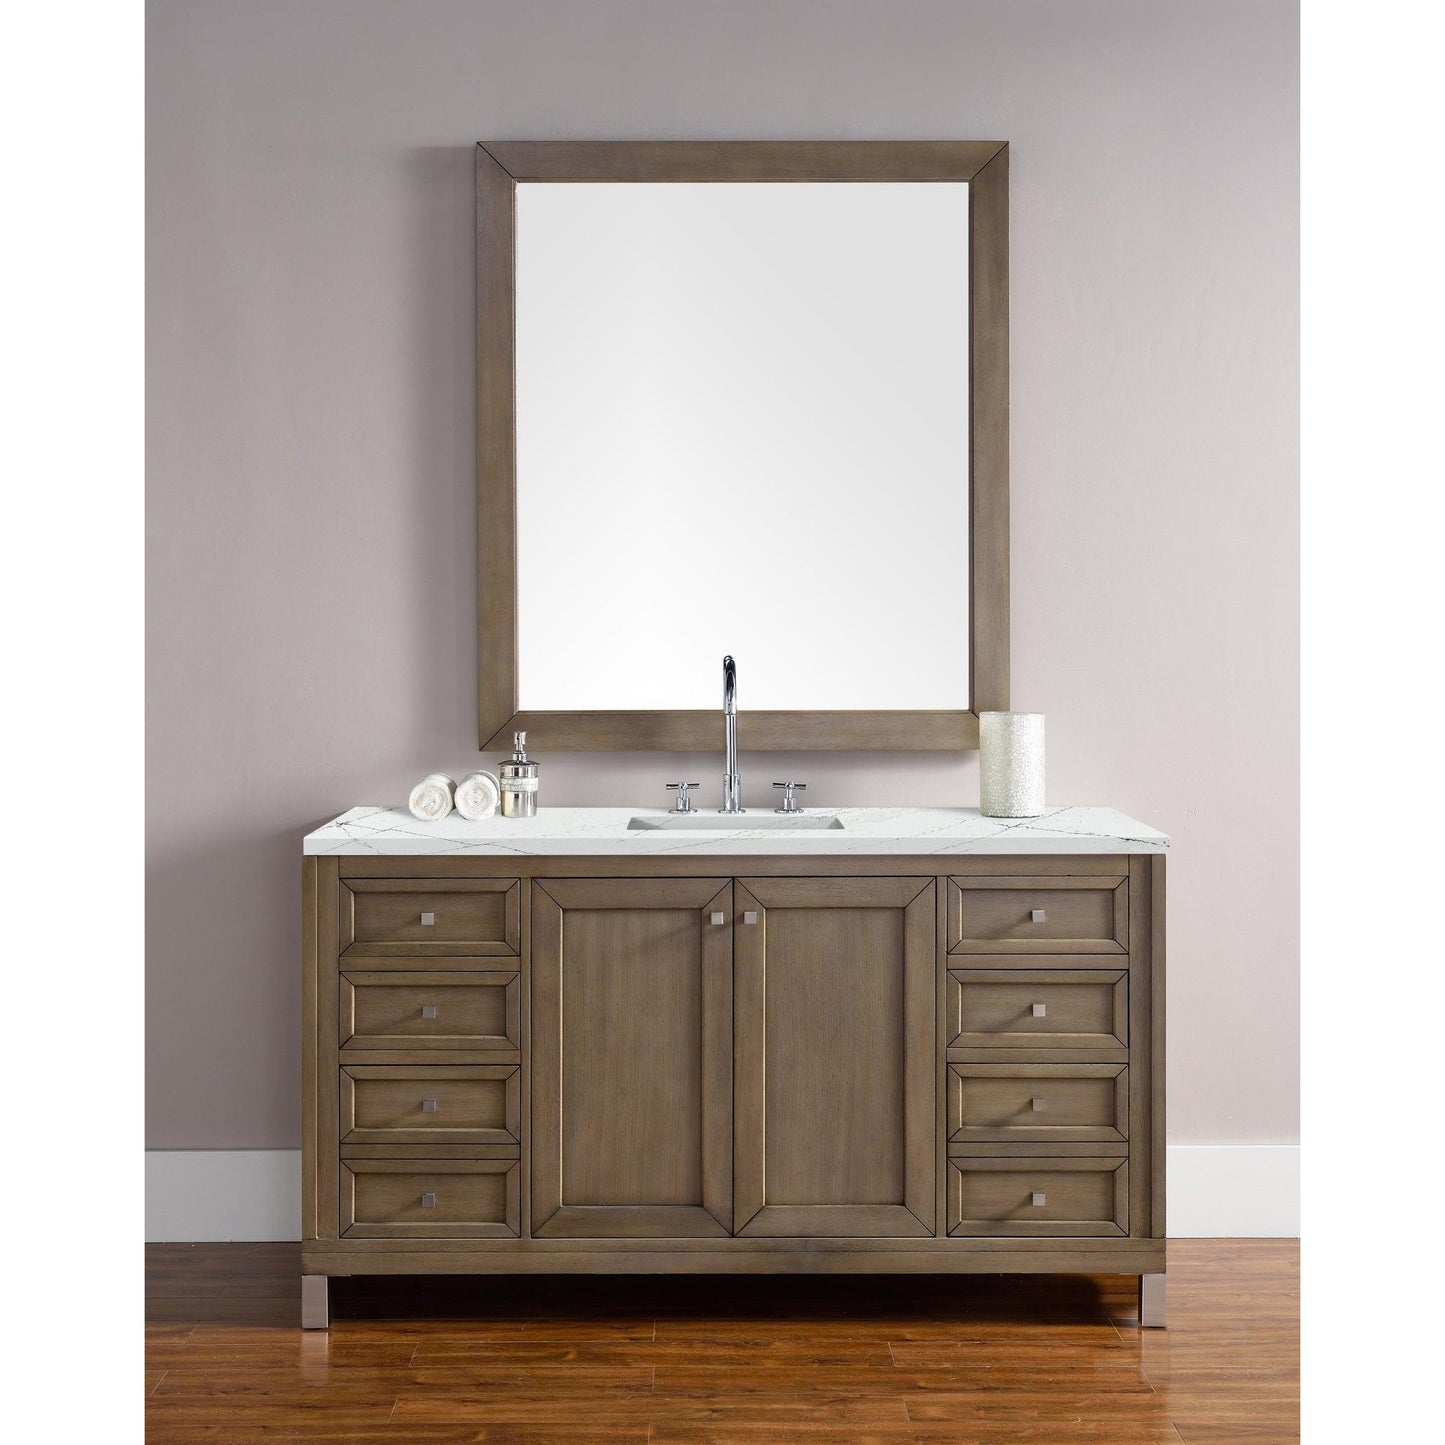 James Martin Chicago 60" Single Whitewashed Walnut Bathroom Vanity With 1" Ethereal Noctis Quartz Top and Rectangular Ceramic Sink